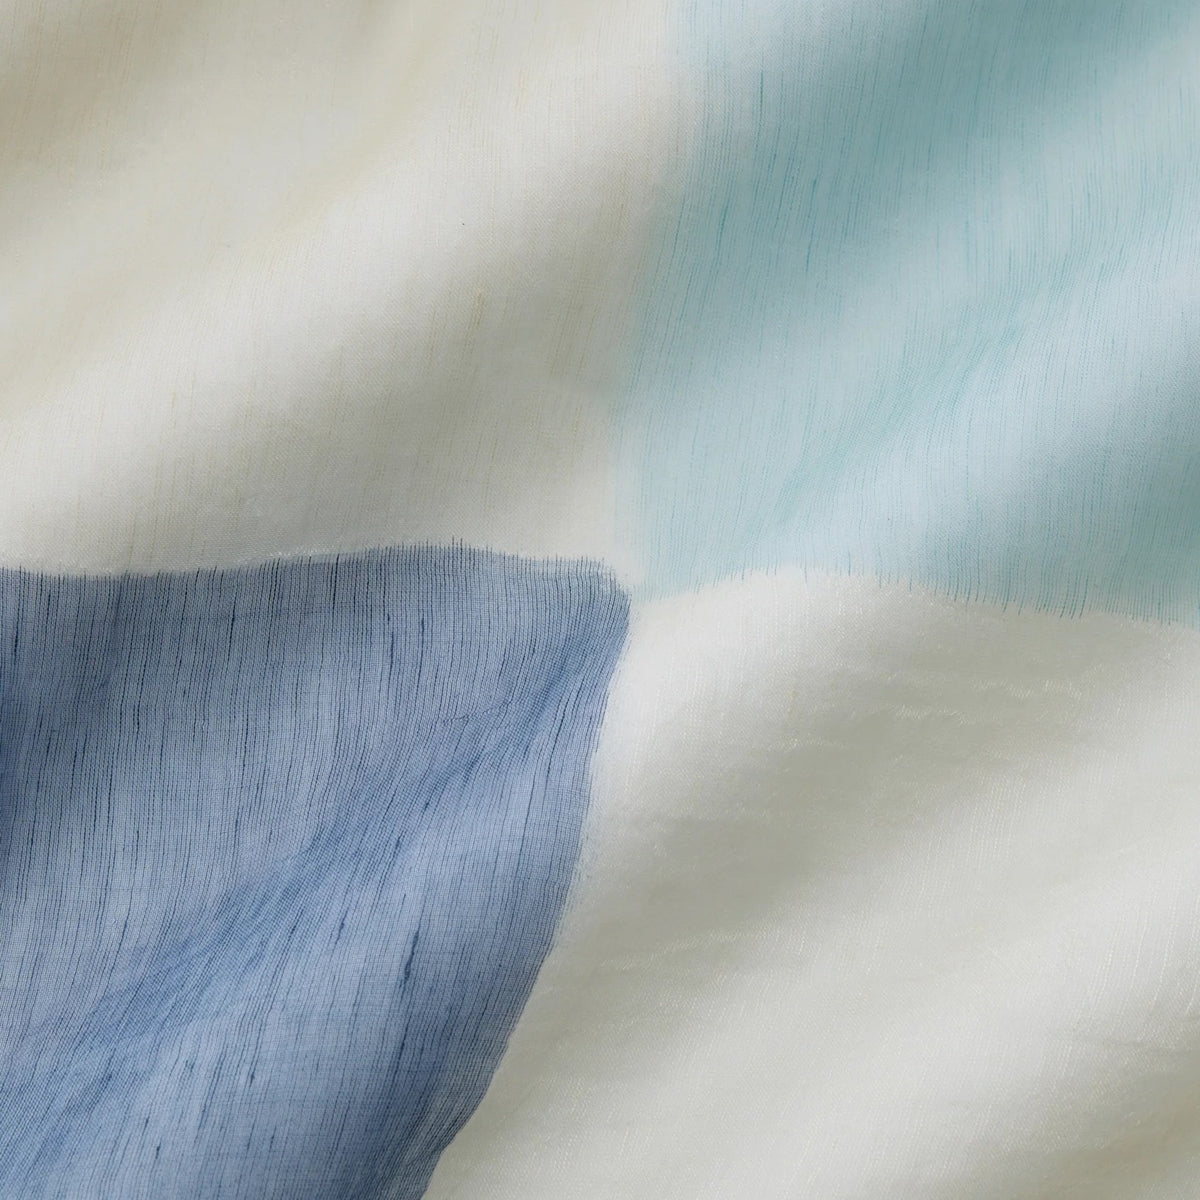 Swatch Sample of Sferra Pitura Throw Blanket in Color Navy/Aqua